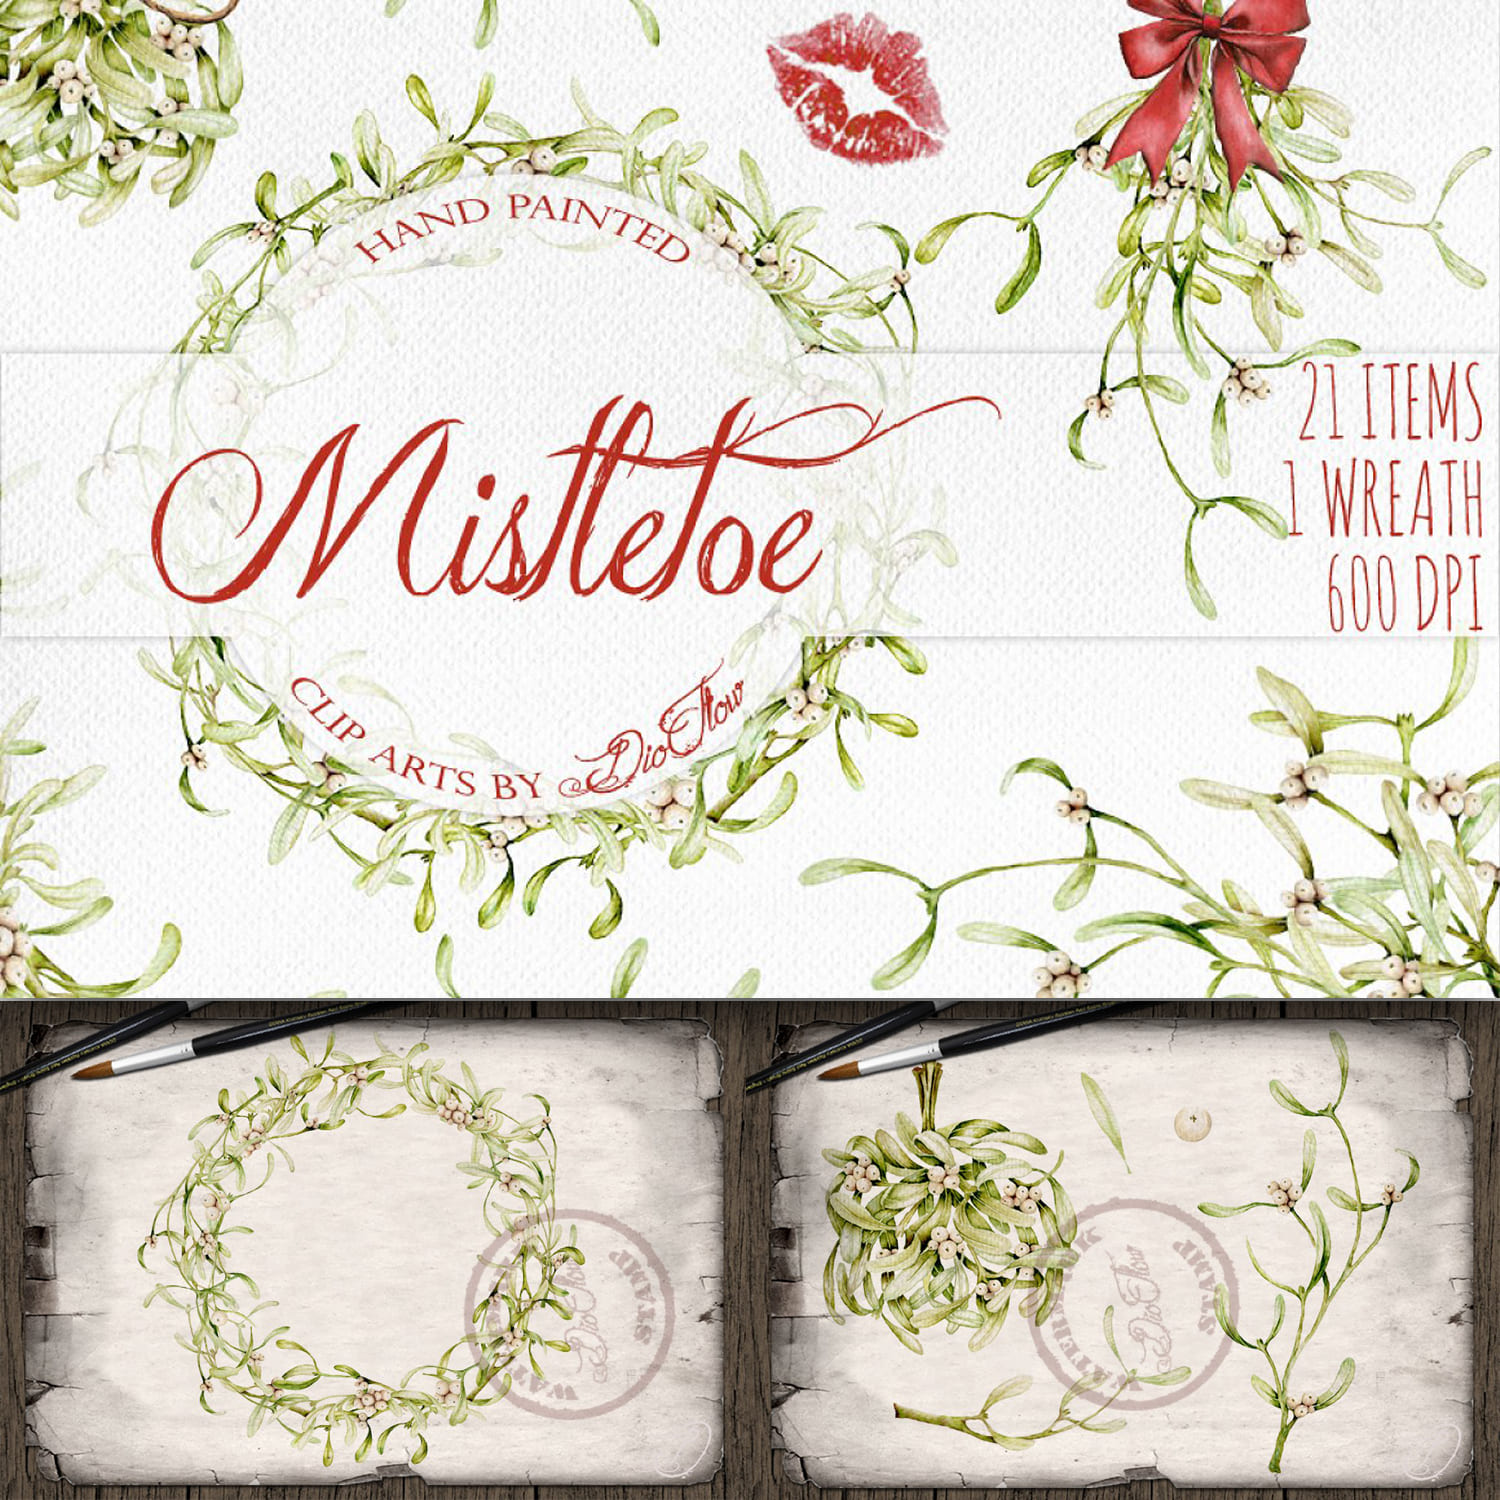 Mistletoe Watercolor Illustration cover.